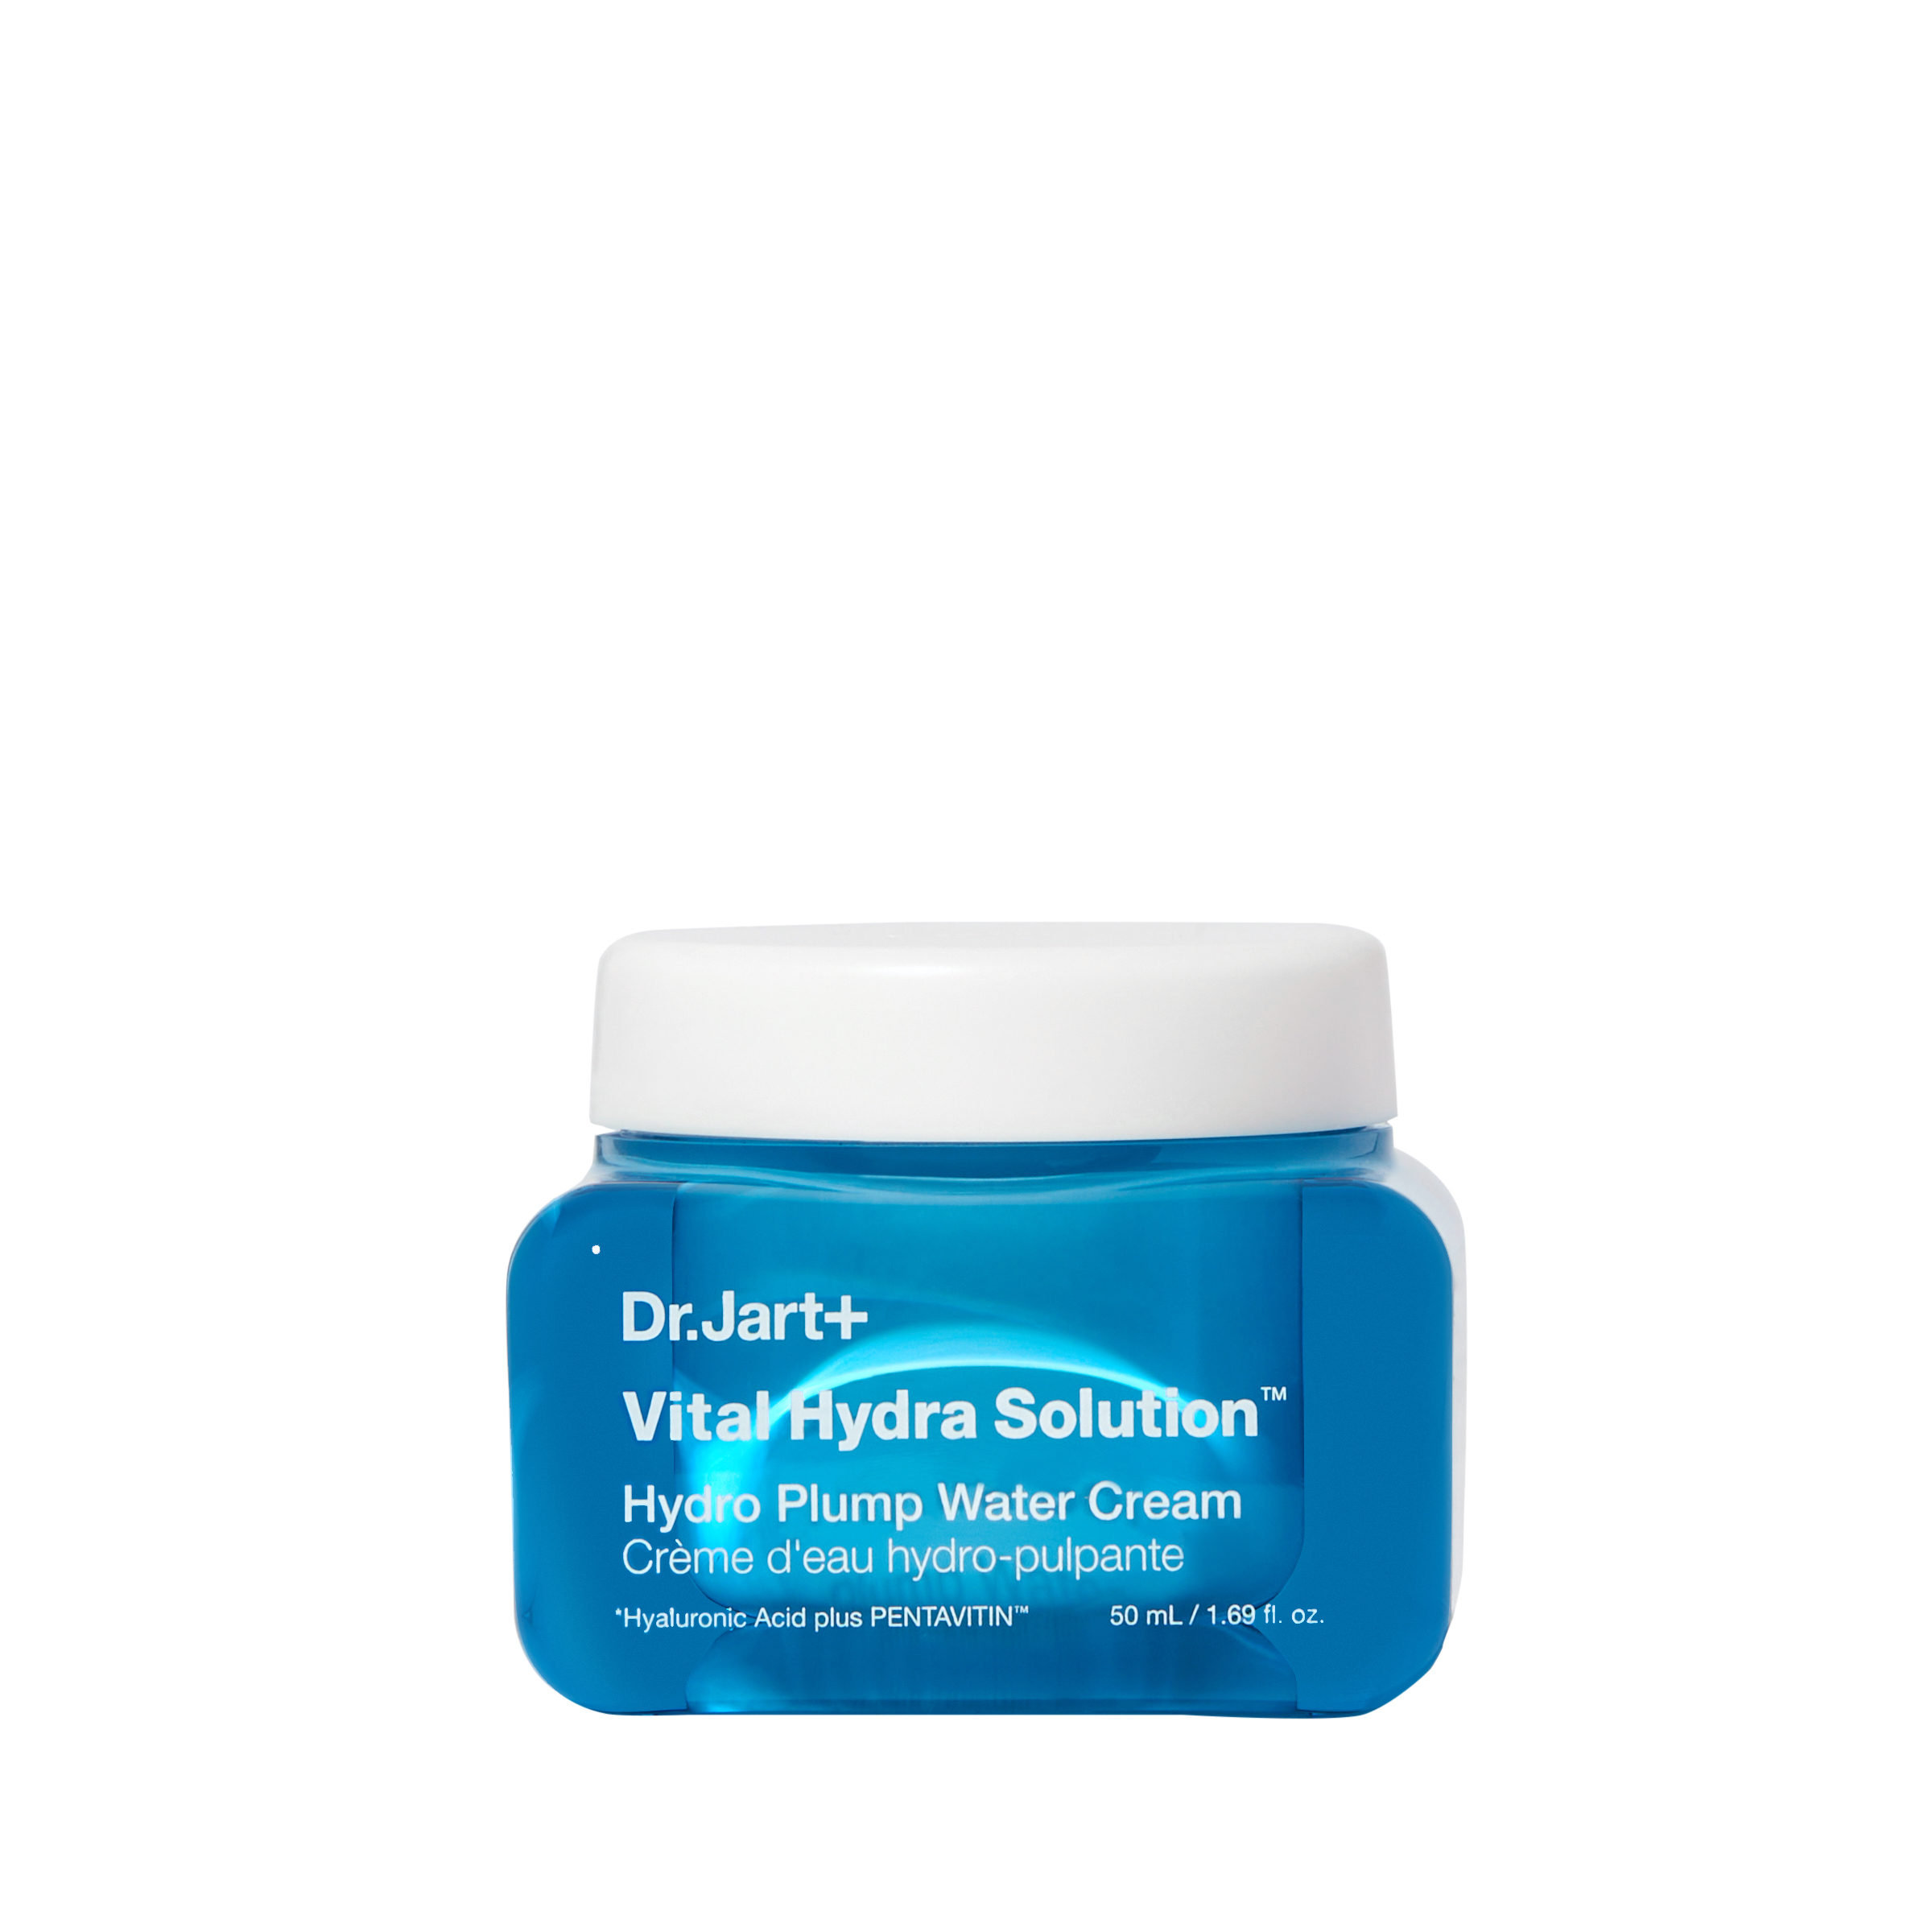 Vital Hydra Solution™ Biome Water Cream Vital Hydra Solution™ Biome Water Cream